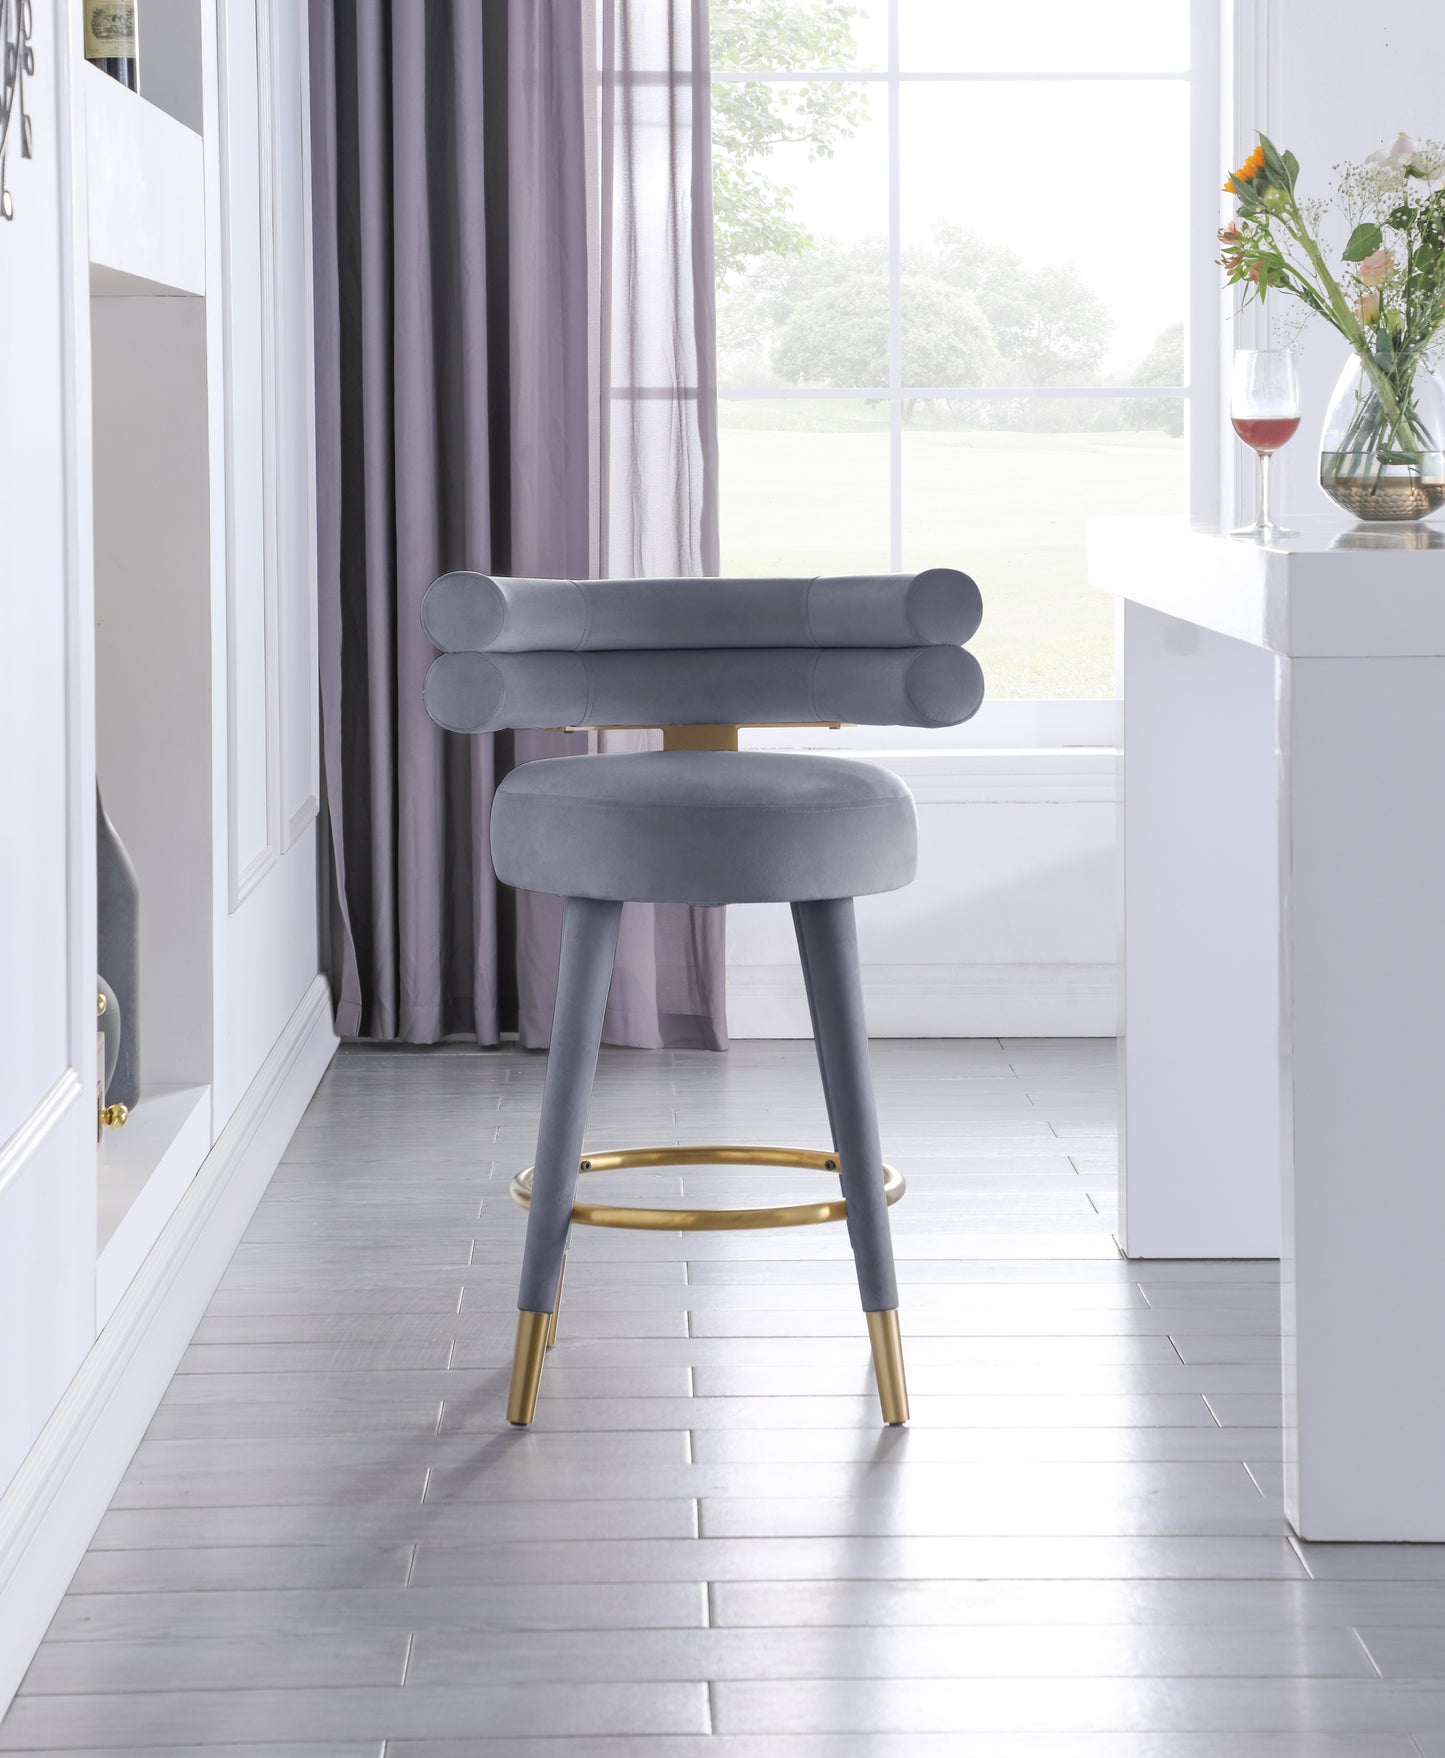 burton grey velvet counter stool c